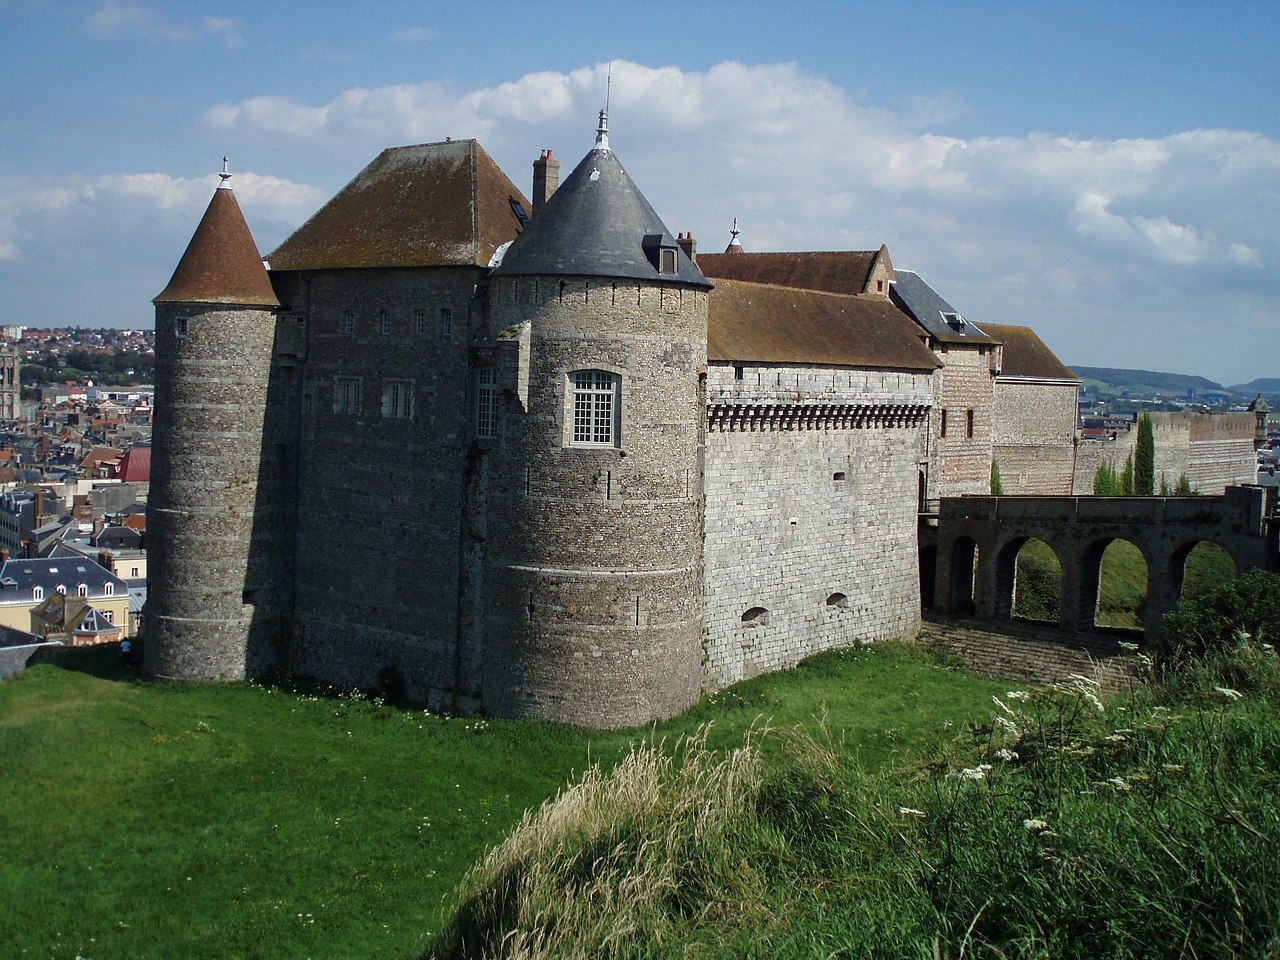 https://upload.wikimedia.org/wikipedia/commons/thumb/d/df/Chateau_de_Dieppe.JPG/1280px-Chateau_de_Dieppe.JPG